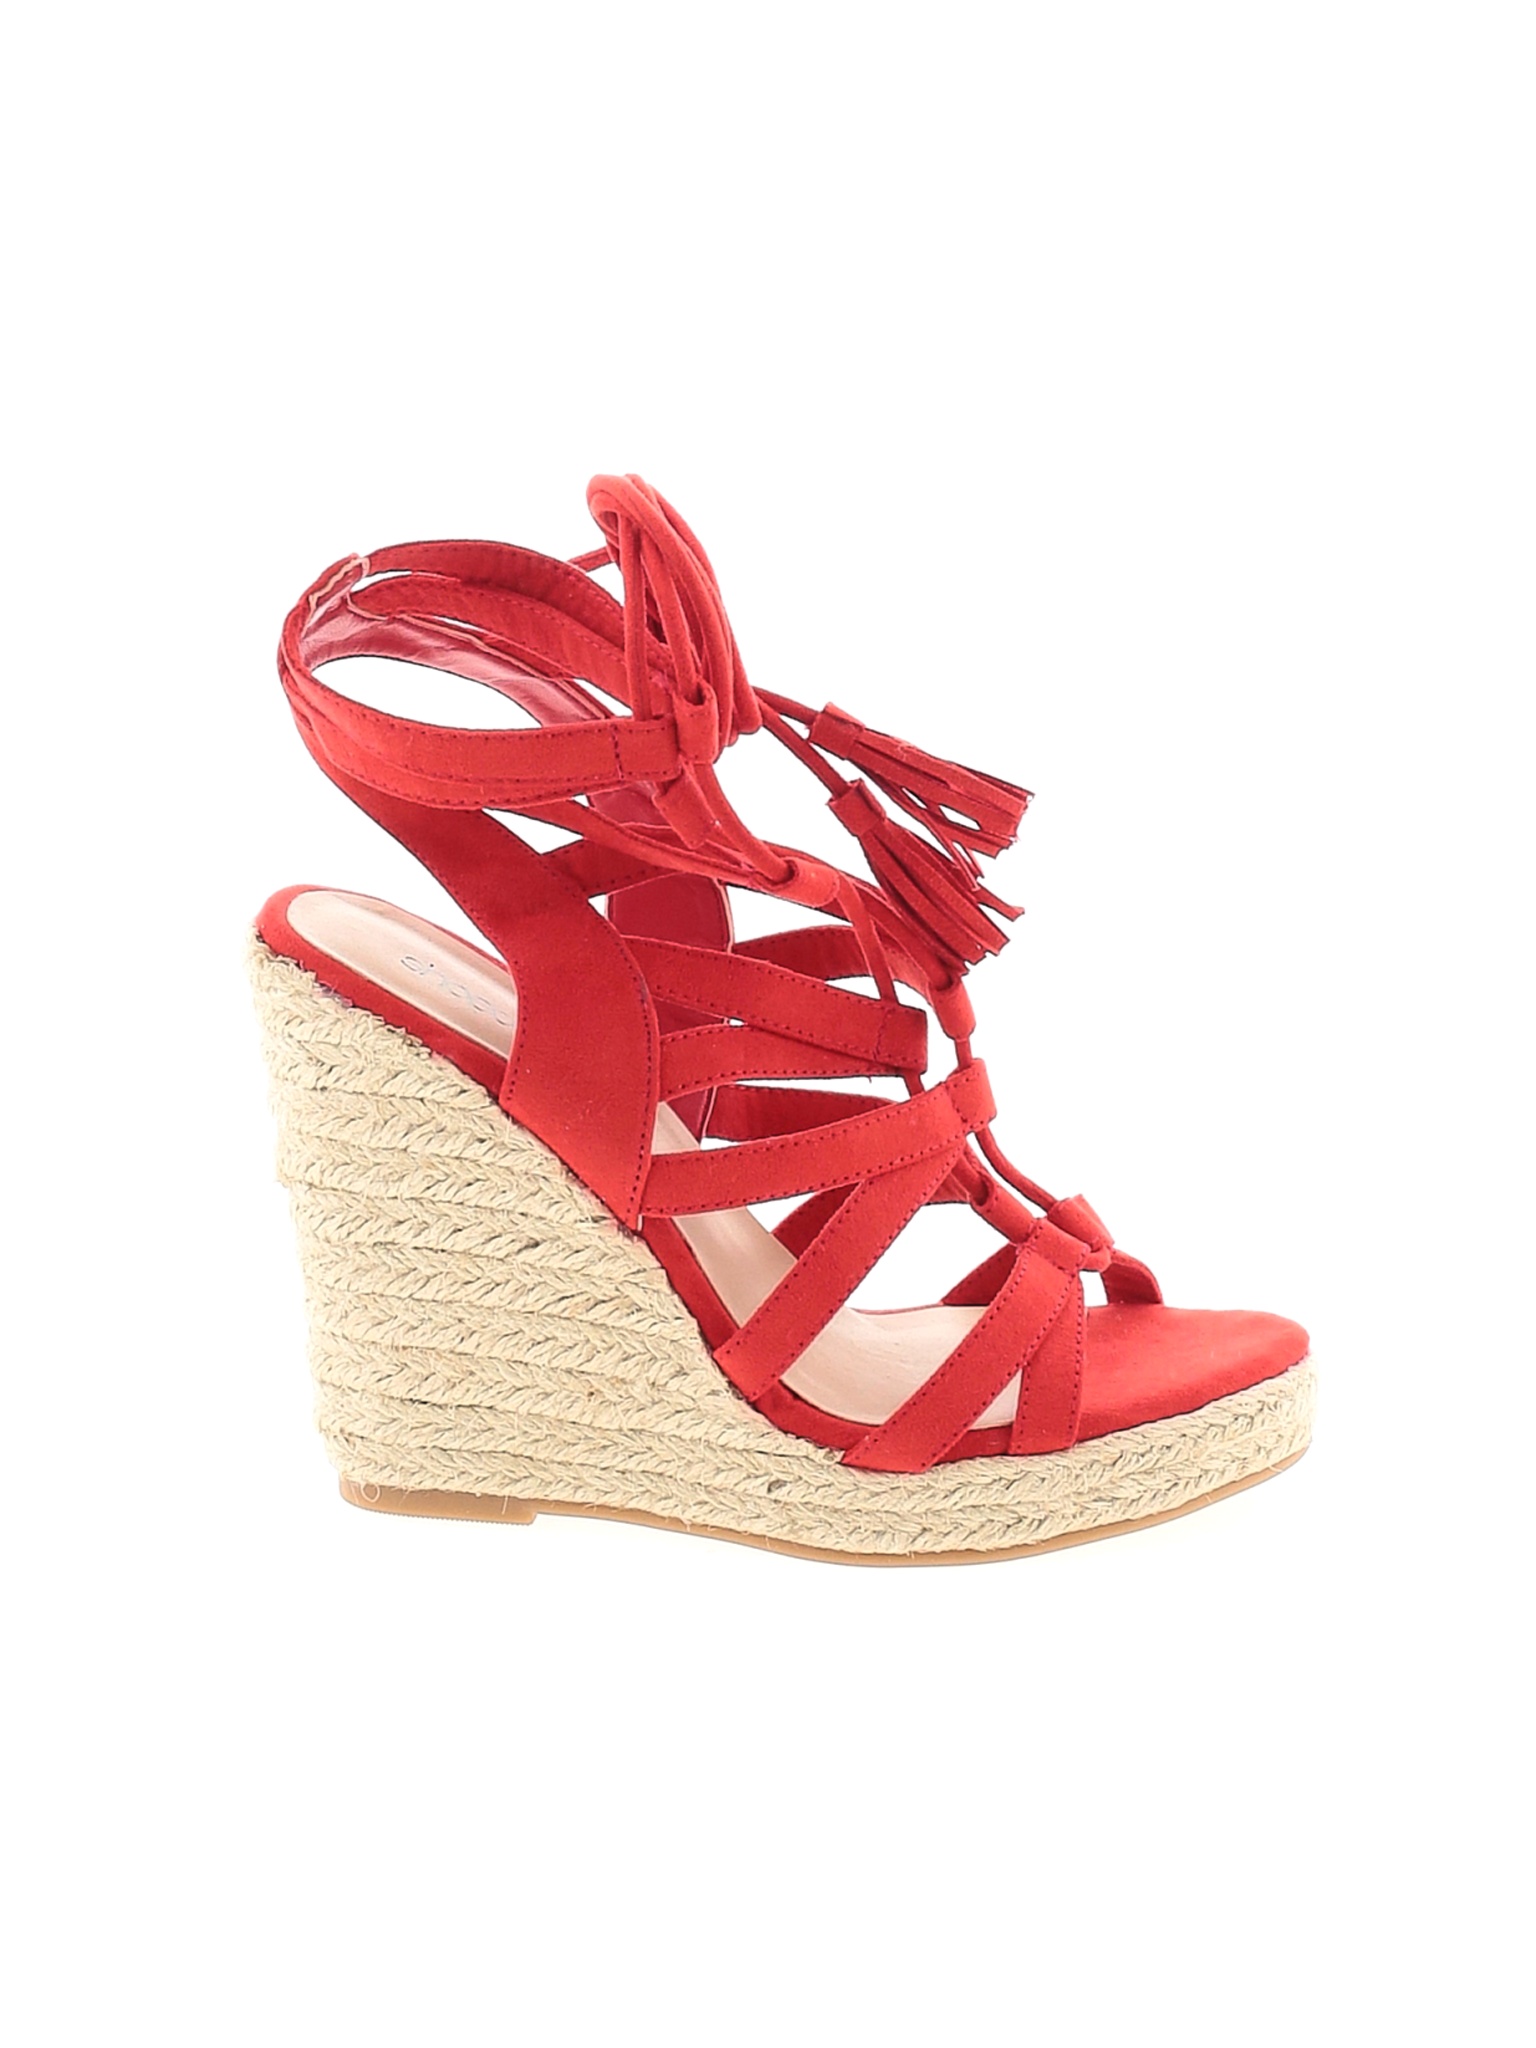 NWT Shoedazzle Women Red Wedges US 6 | eBay